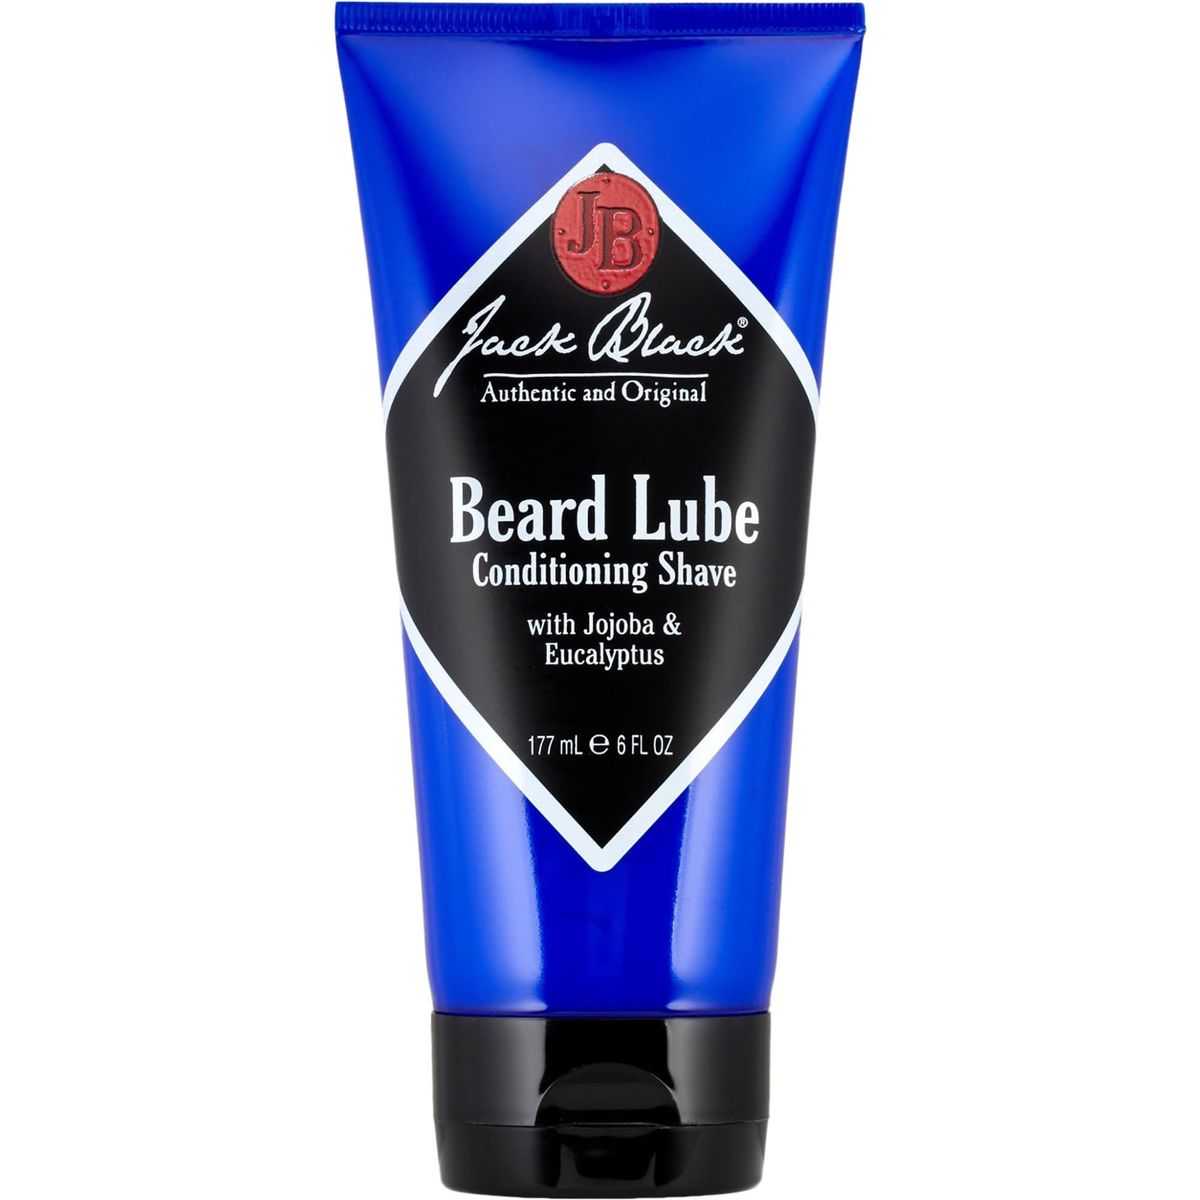 Jack Black Beard Lube Conditioning Shave - 6oz.